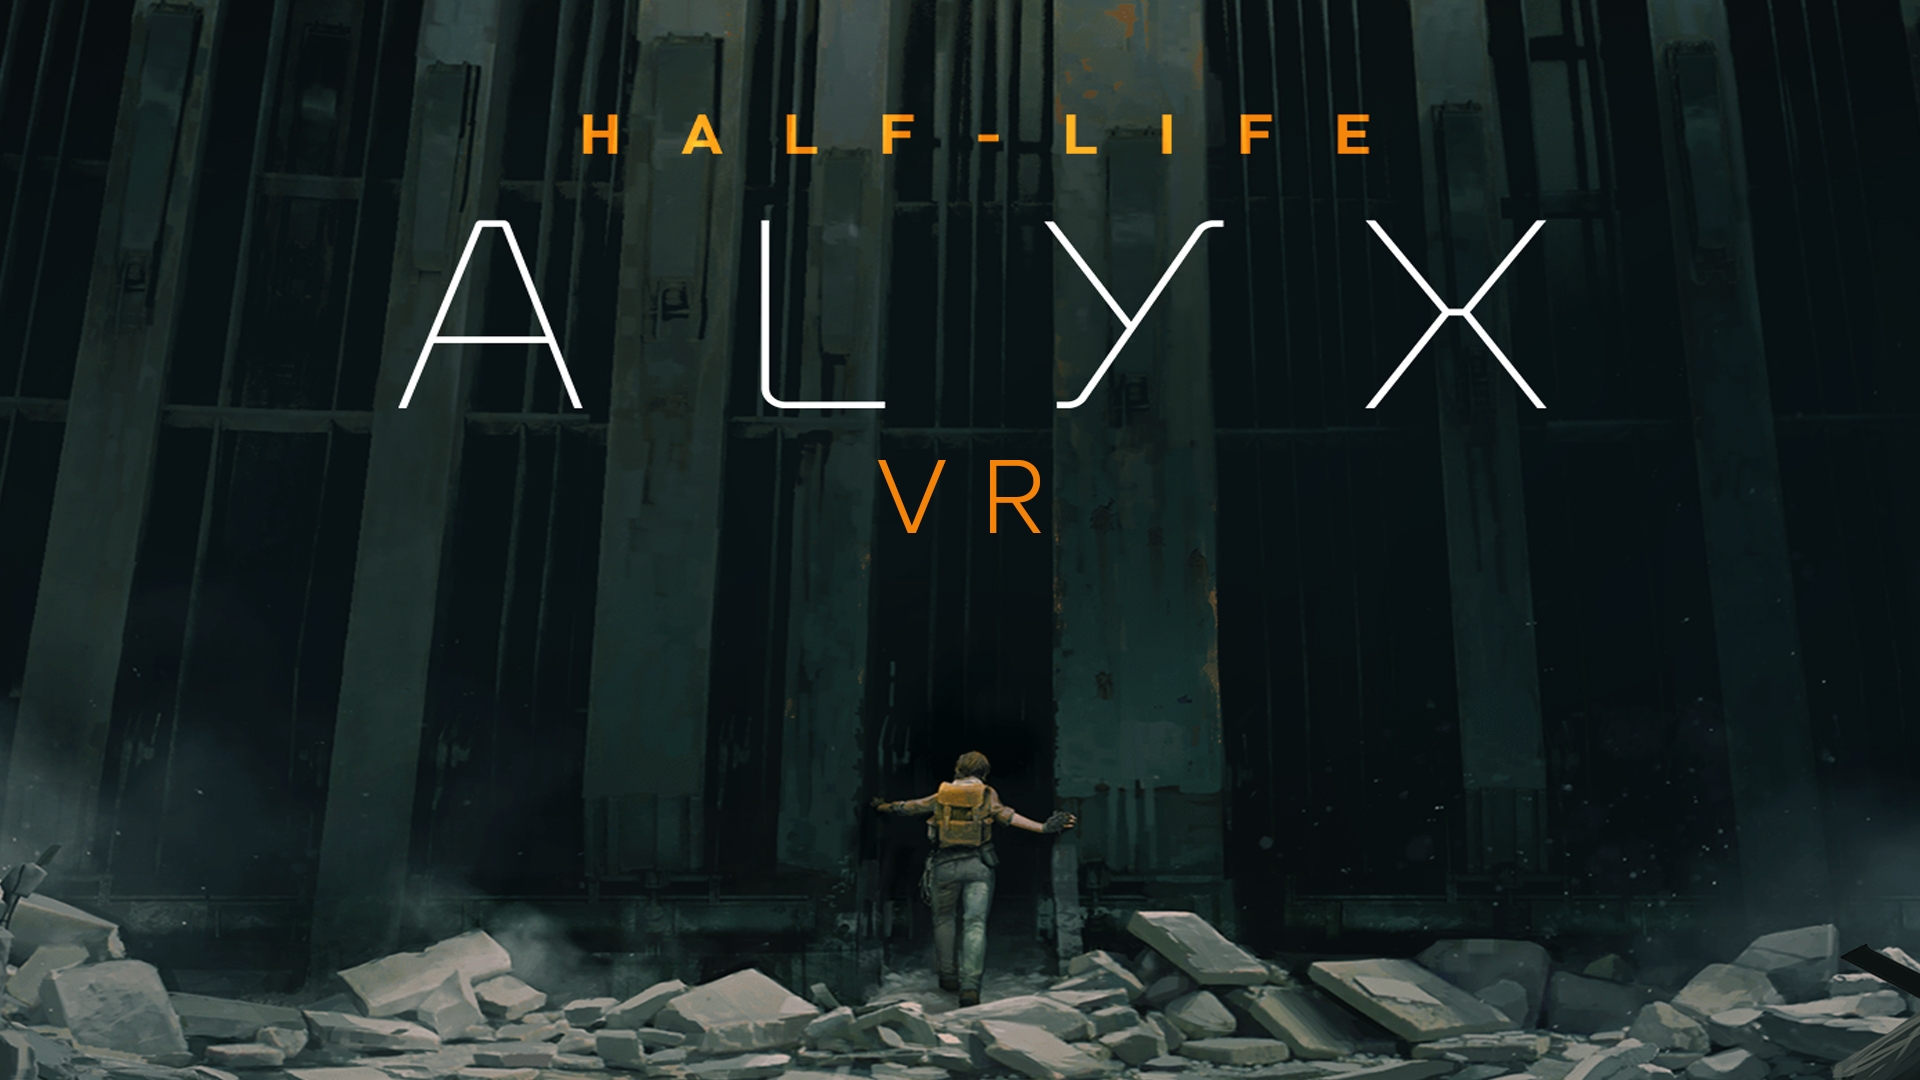 Antarctic Alyx (HL3 Alyx Vance) Free to use! [Half-Life 2] [Mods]